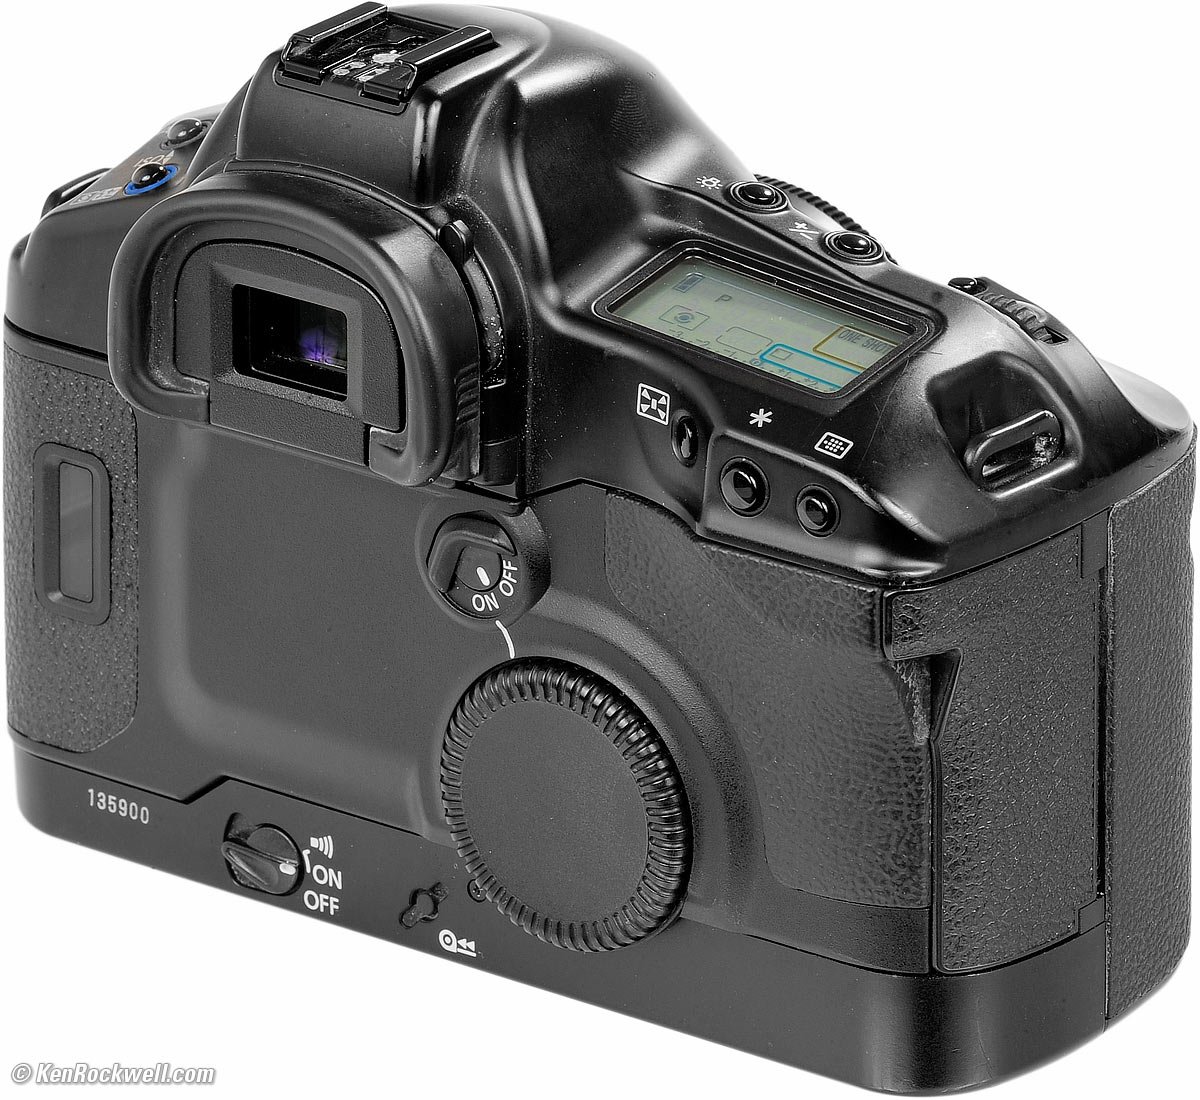 Canon EOS-1V Review